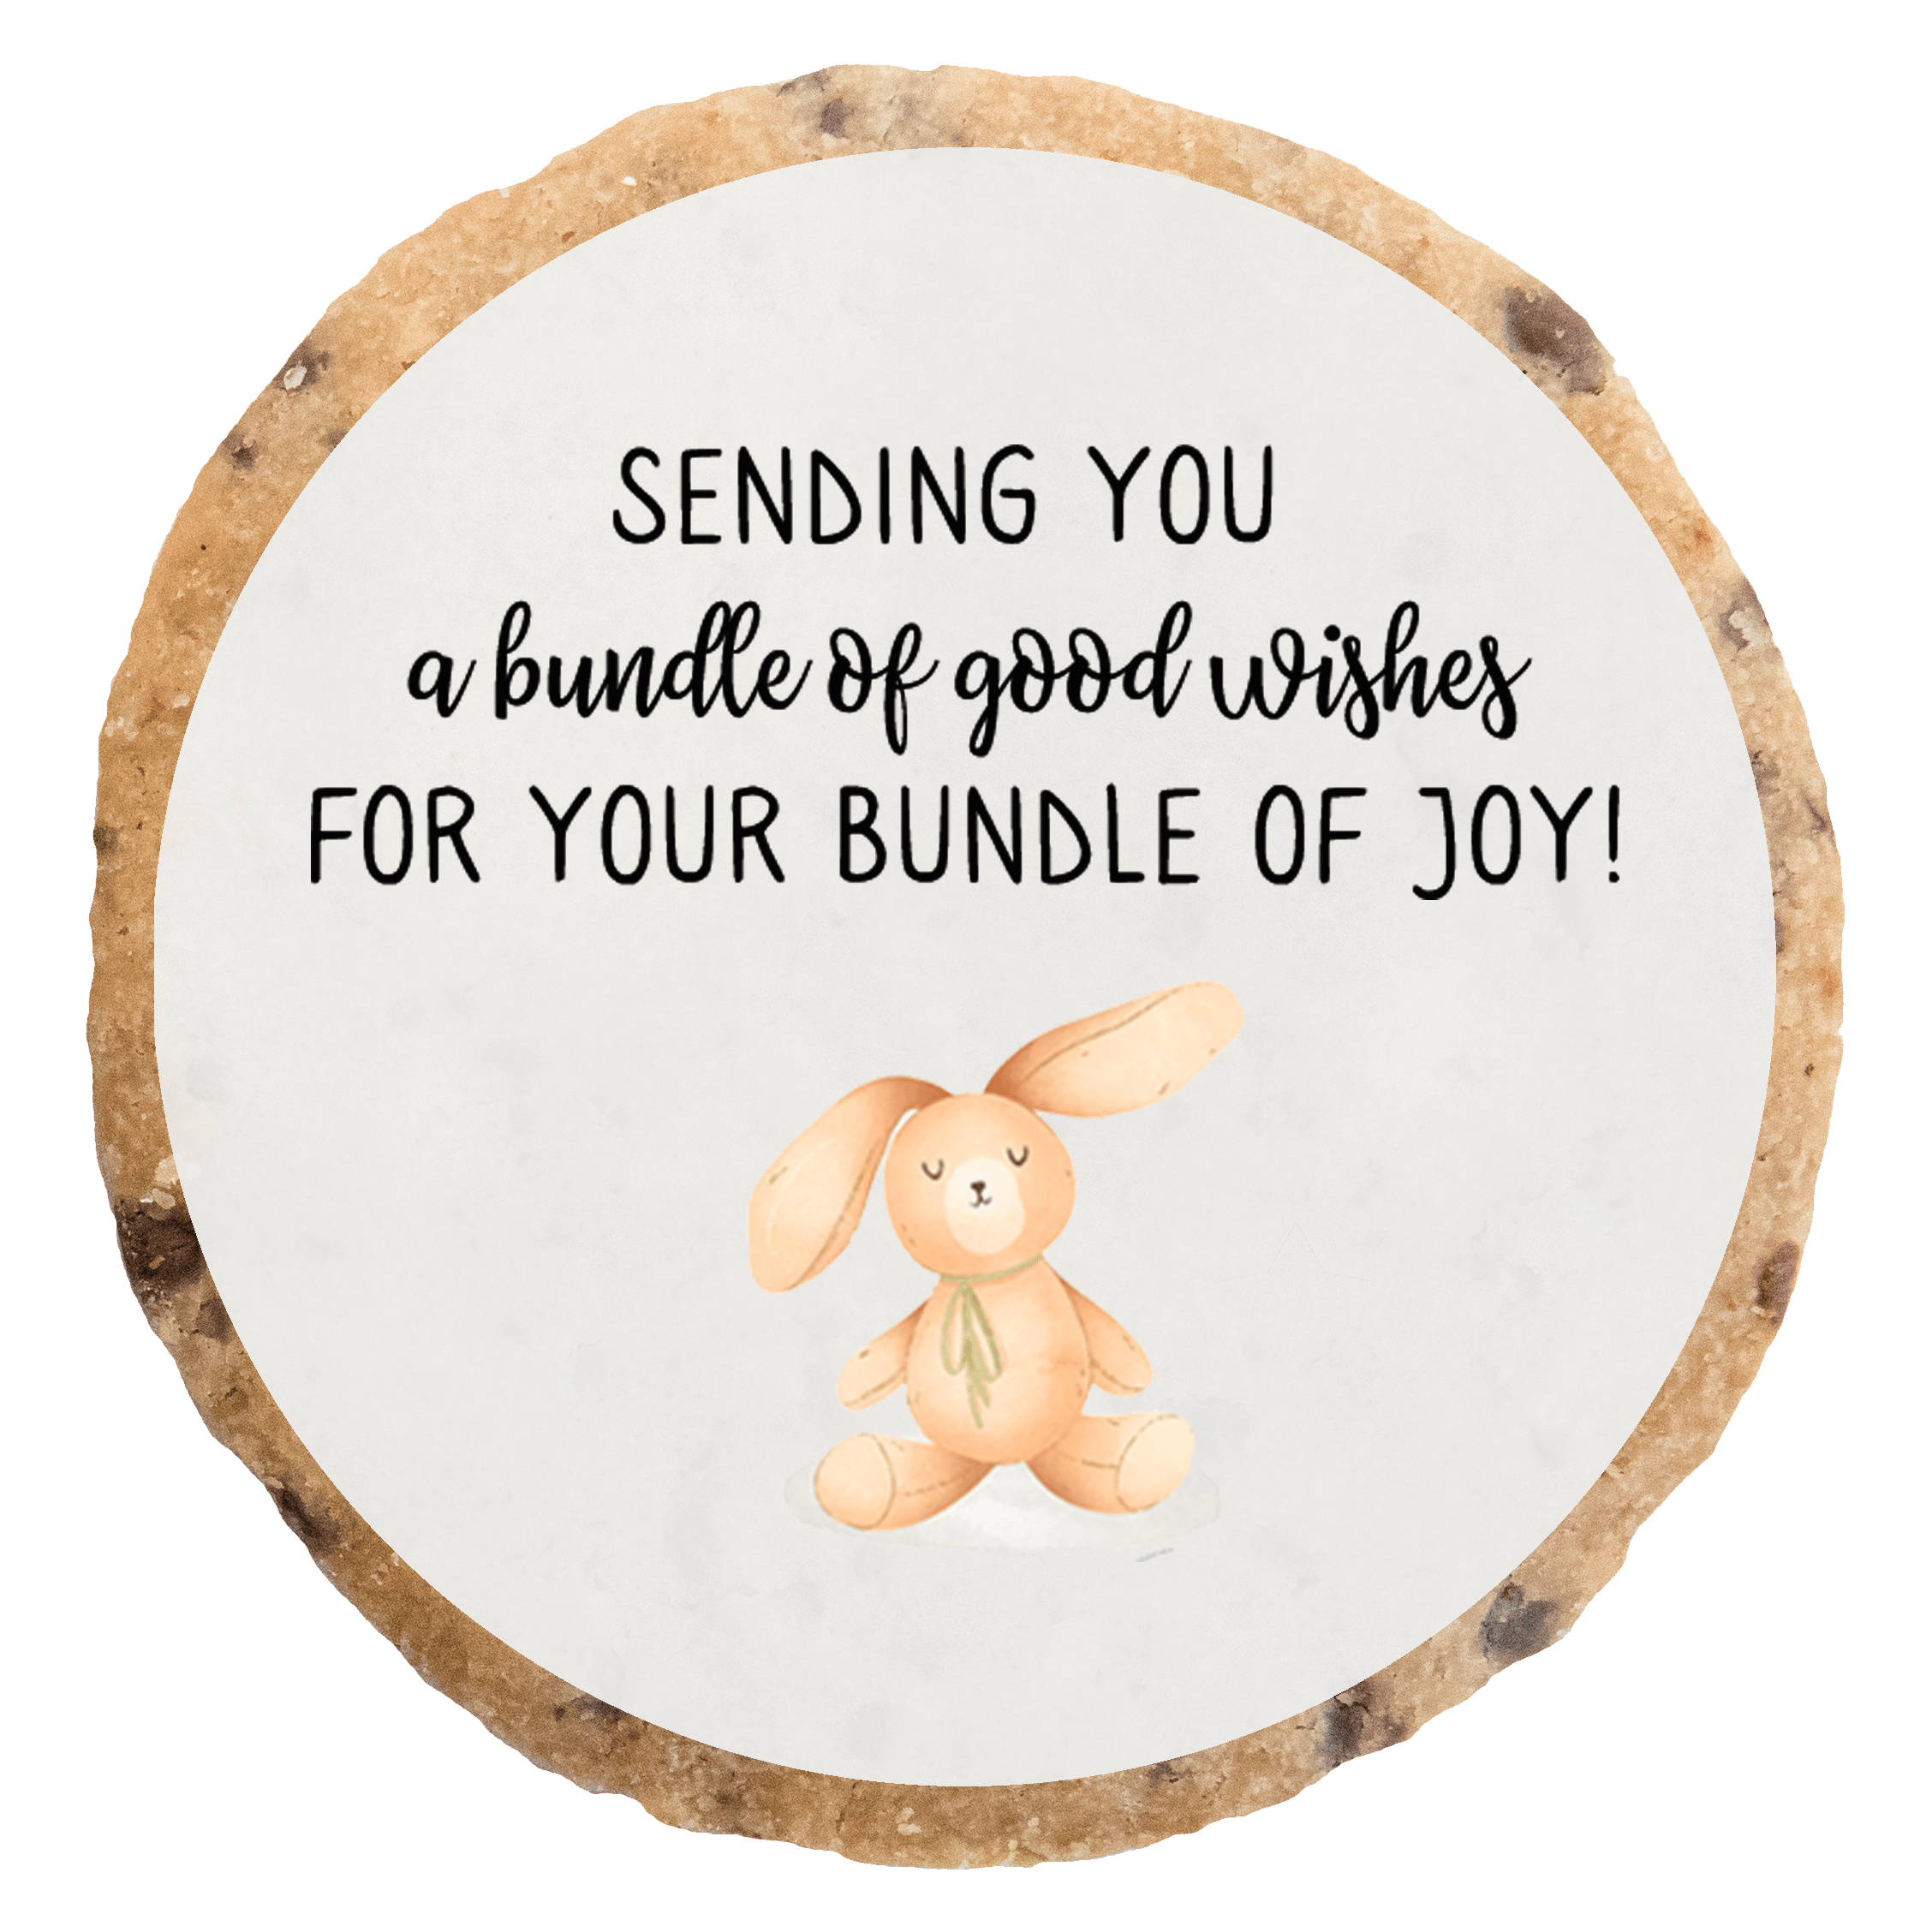 "Sending you a bundle of good wishes" MotivKEKS